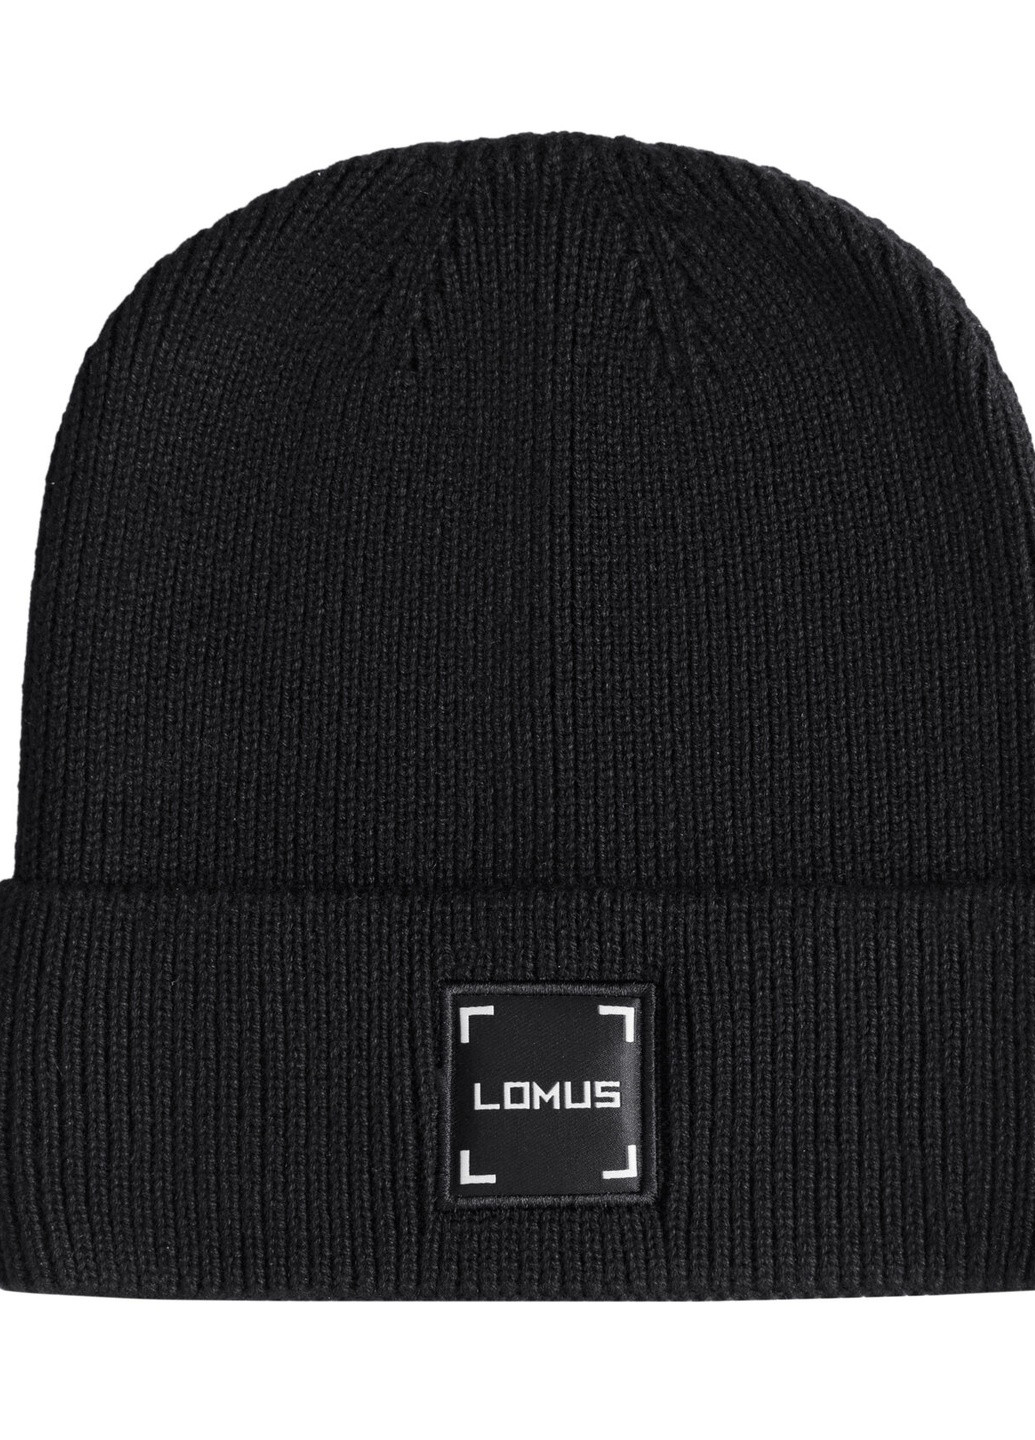 Шапка дизайнерская Логотипом LOMUS Trend hat lomus black (256558245)